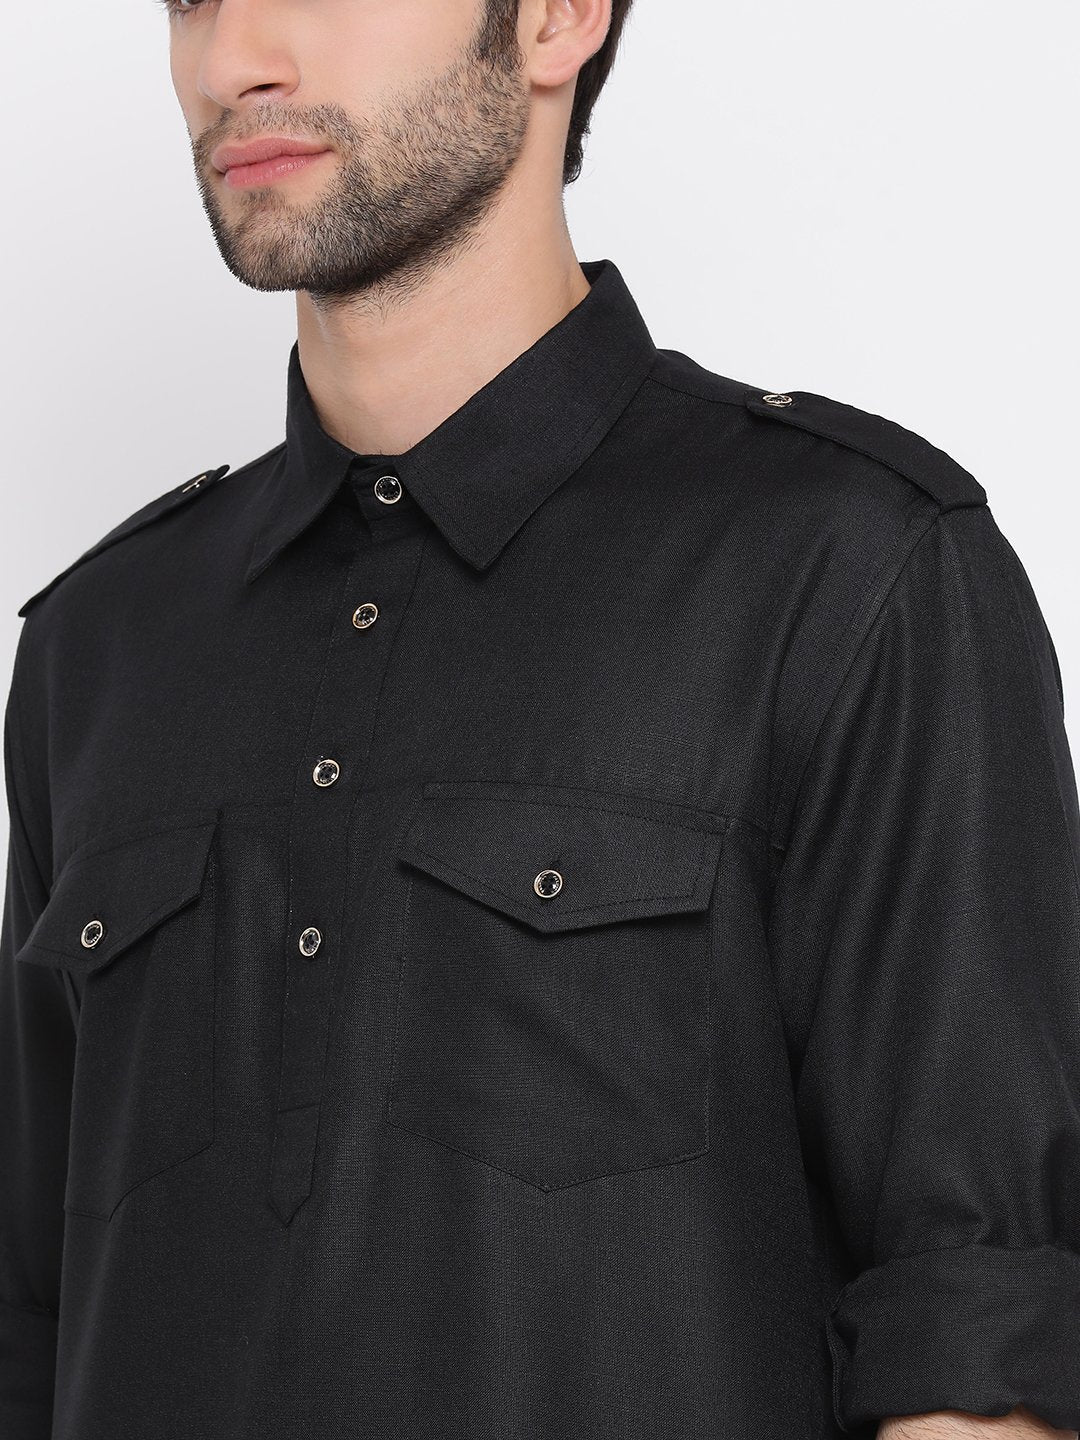 Men's Black Cotton Blend Pathani Suit Set - Vastramay